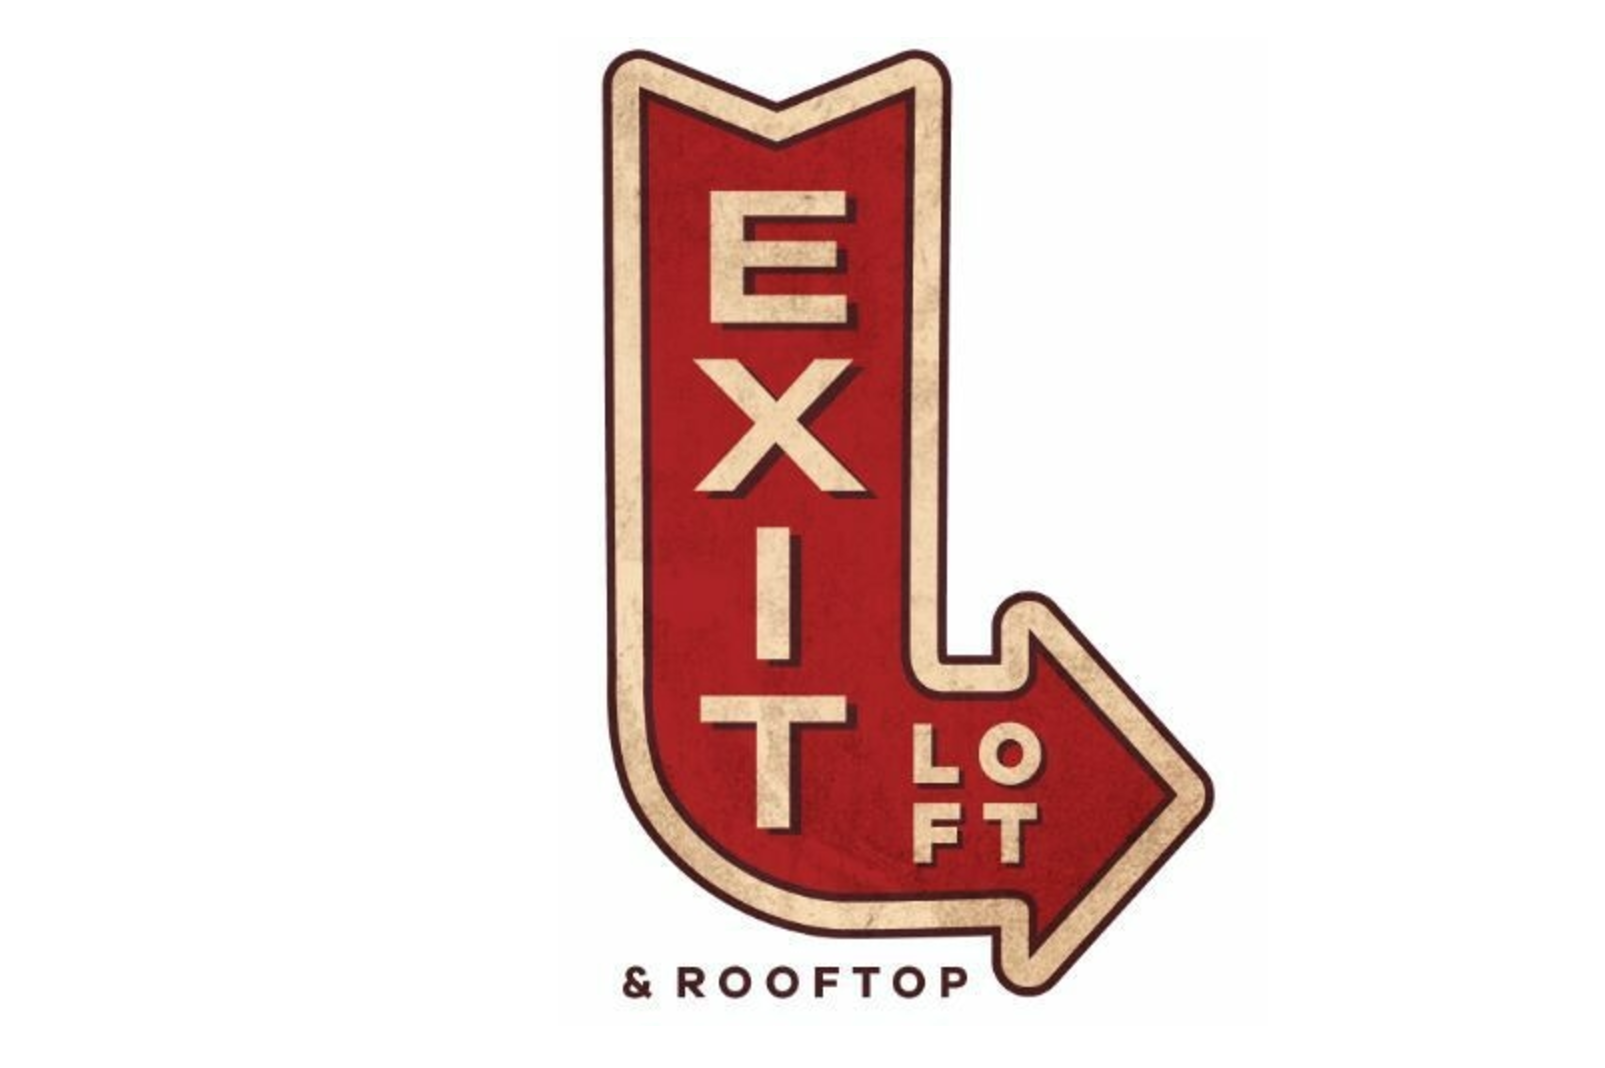 Exit Loft